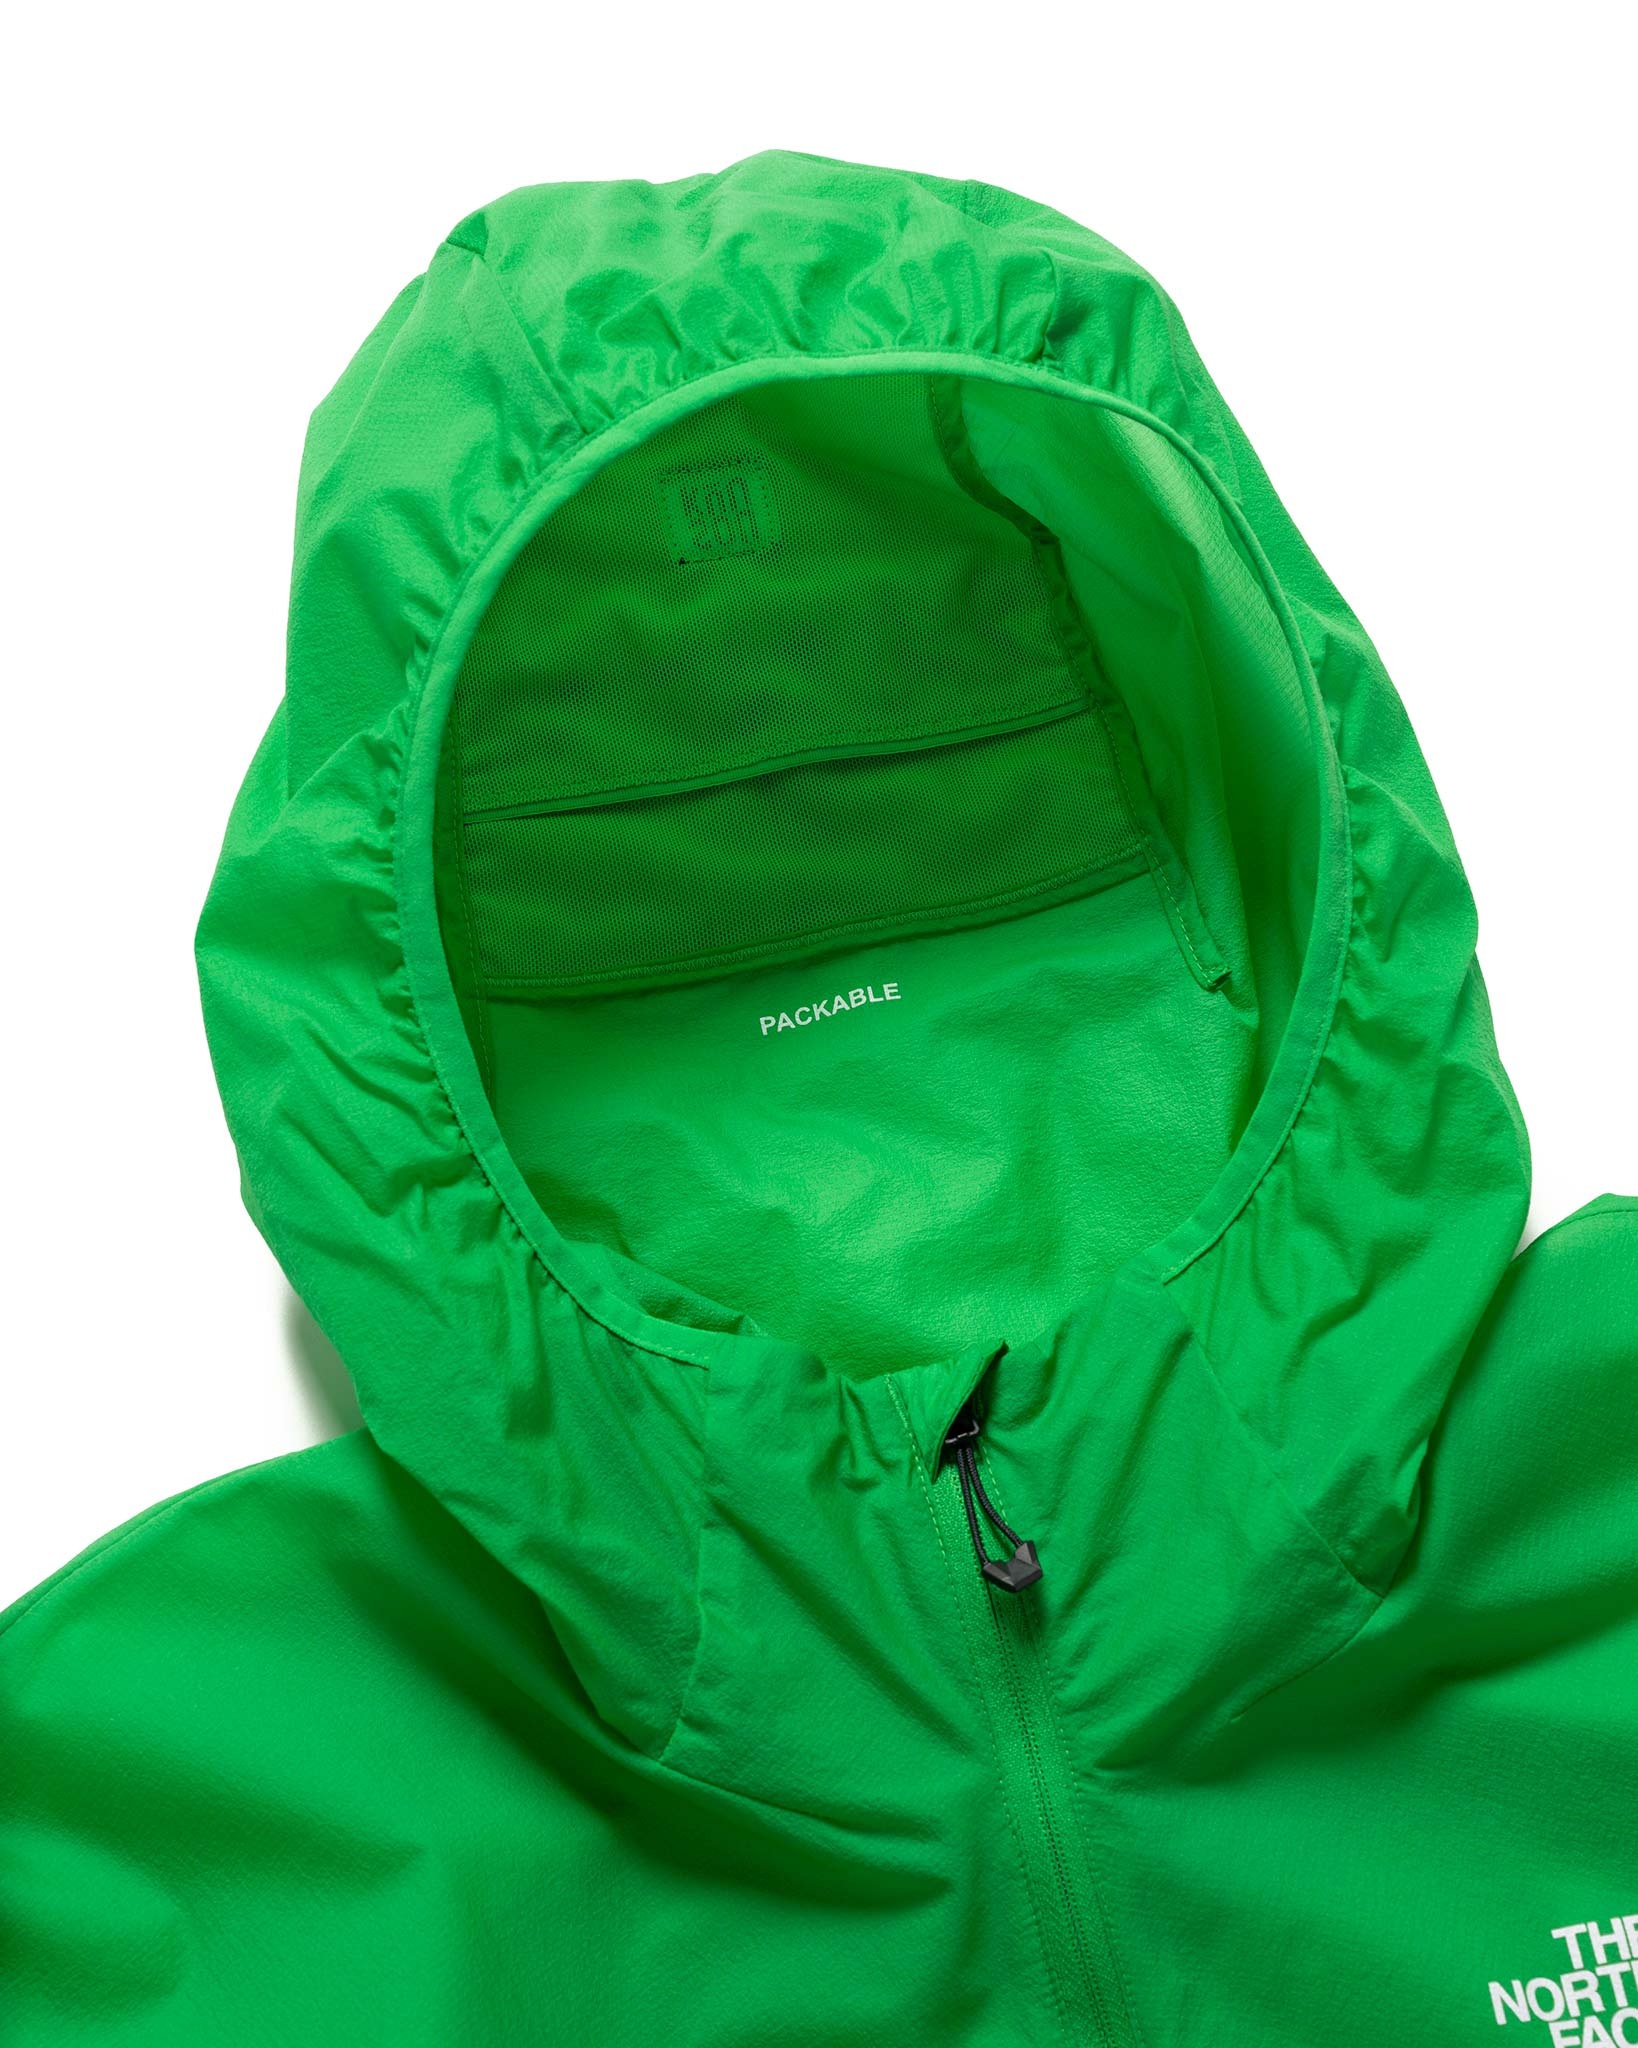 x Undercover SOUKUU Trail Run Packable Wind Jacket Fern Green - 5